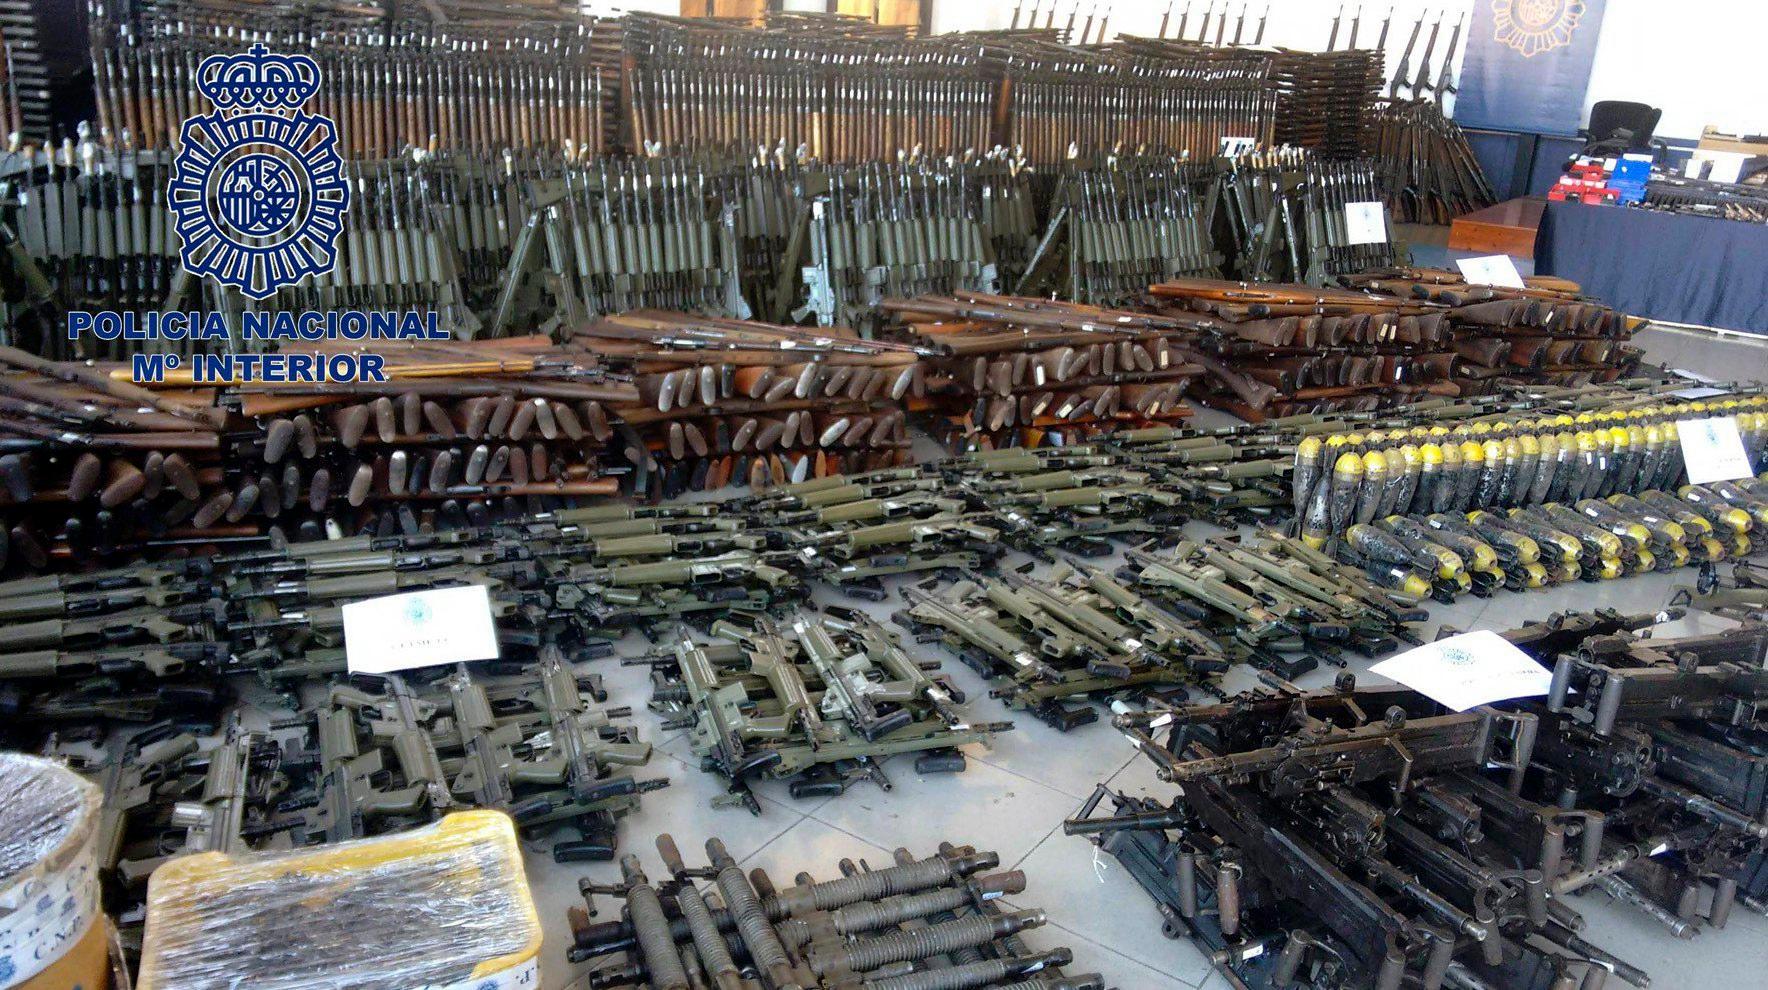 Guns Military equipment and babes pic dump